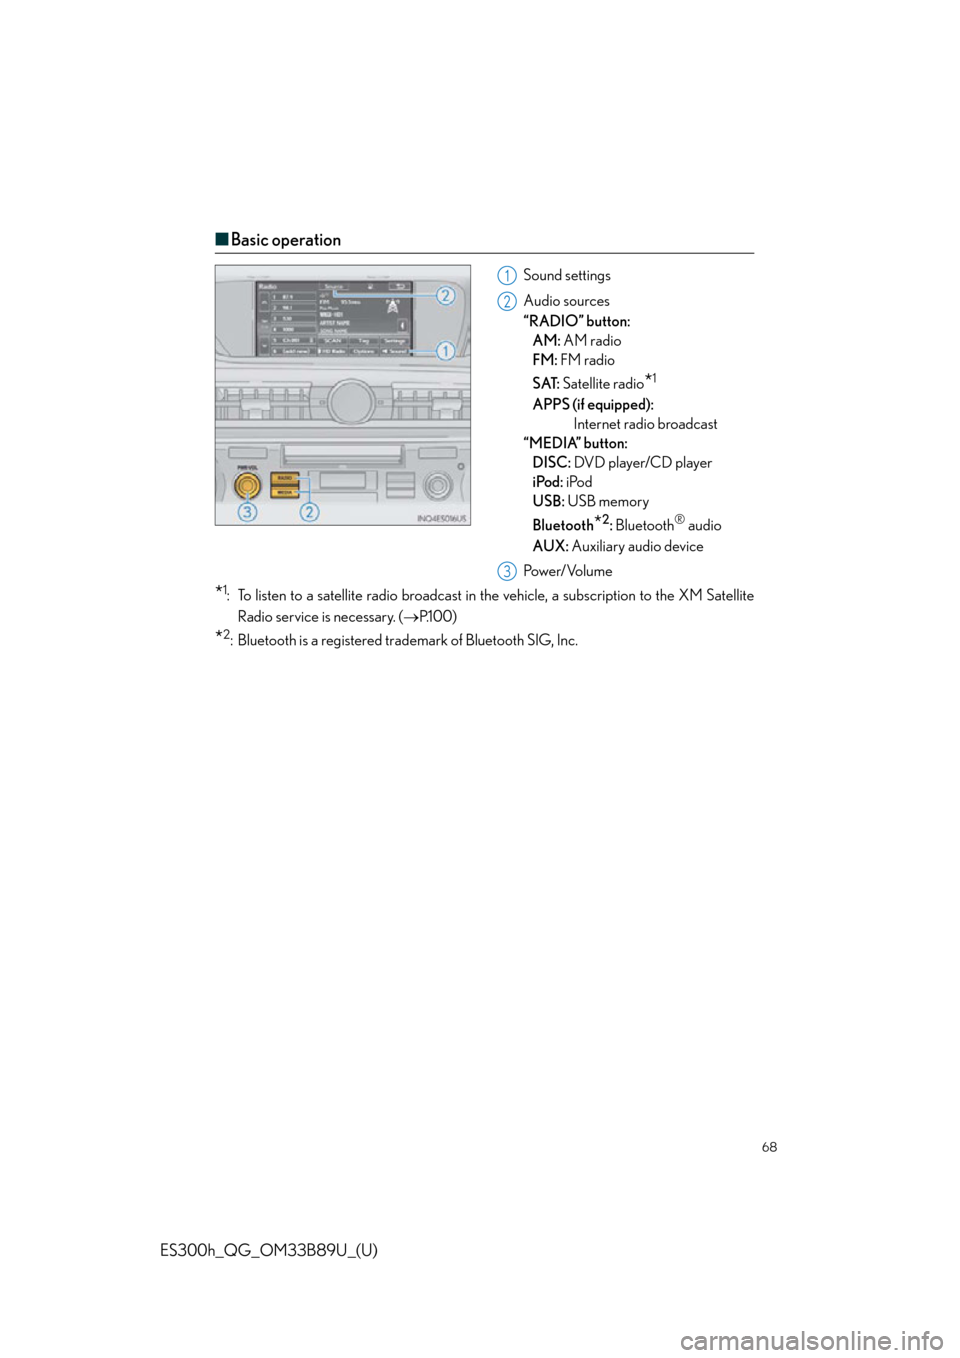 Lexus ES300h 2016   Quick Guide (OM33B89U) Repair Manual 68
ES300h_QG_OM33B89U_(U)
■Basic operation
Sound settings
Audio sources
“RADIO” button: 
AM:  AM radio
FM:  FM radio
SAT:  Satellite radio
*1
APPS (if equipped): 
Internet radio broadcast
“MED